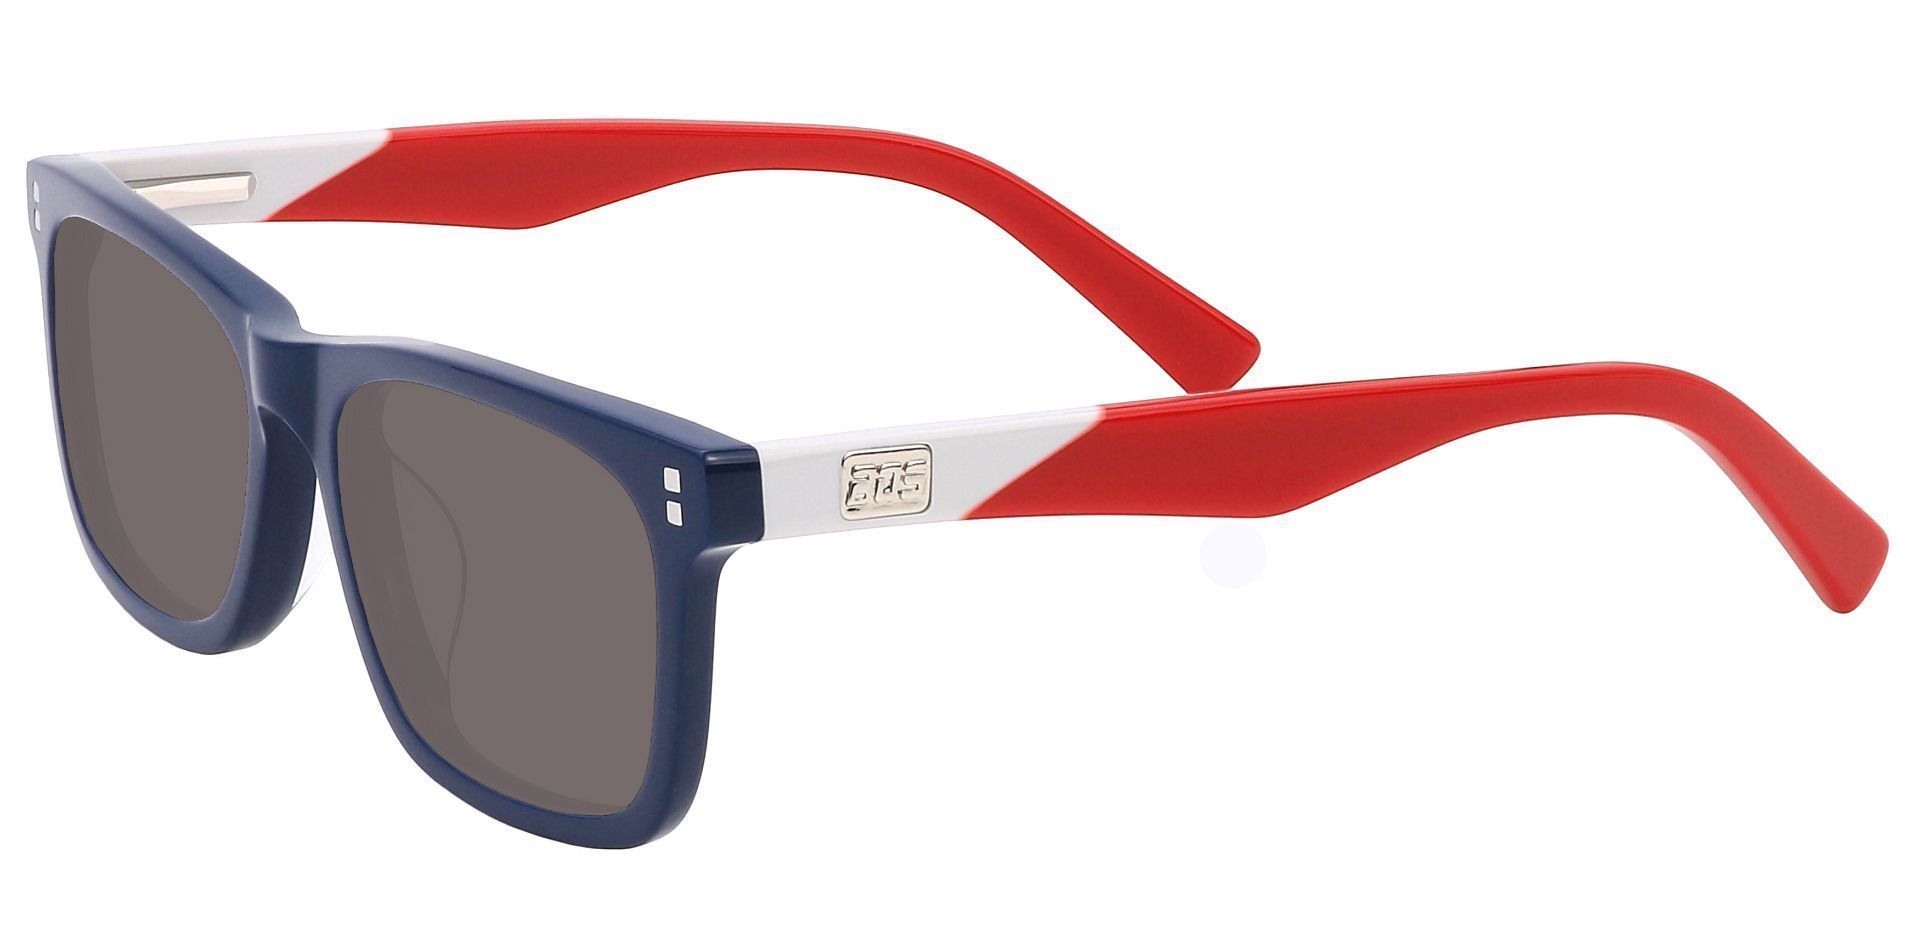 Harbor Rectangle Reading Sunglasses - Blue Frame With Gray Lenses